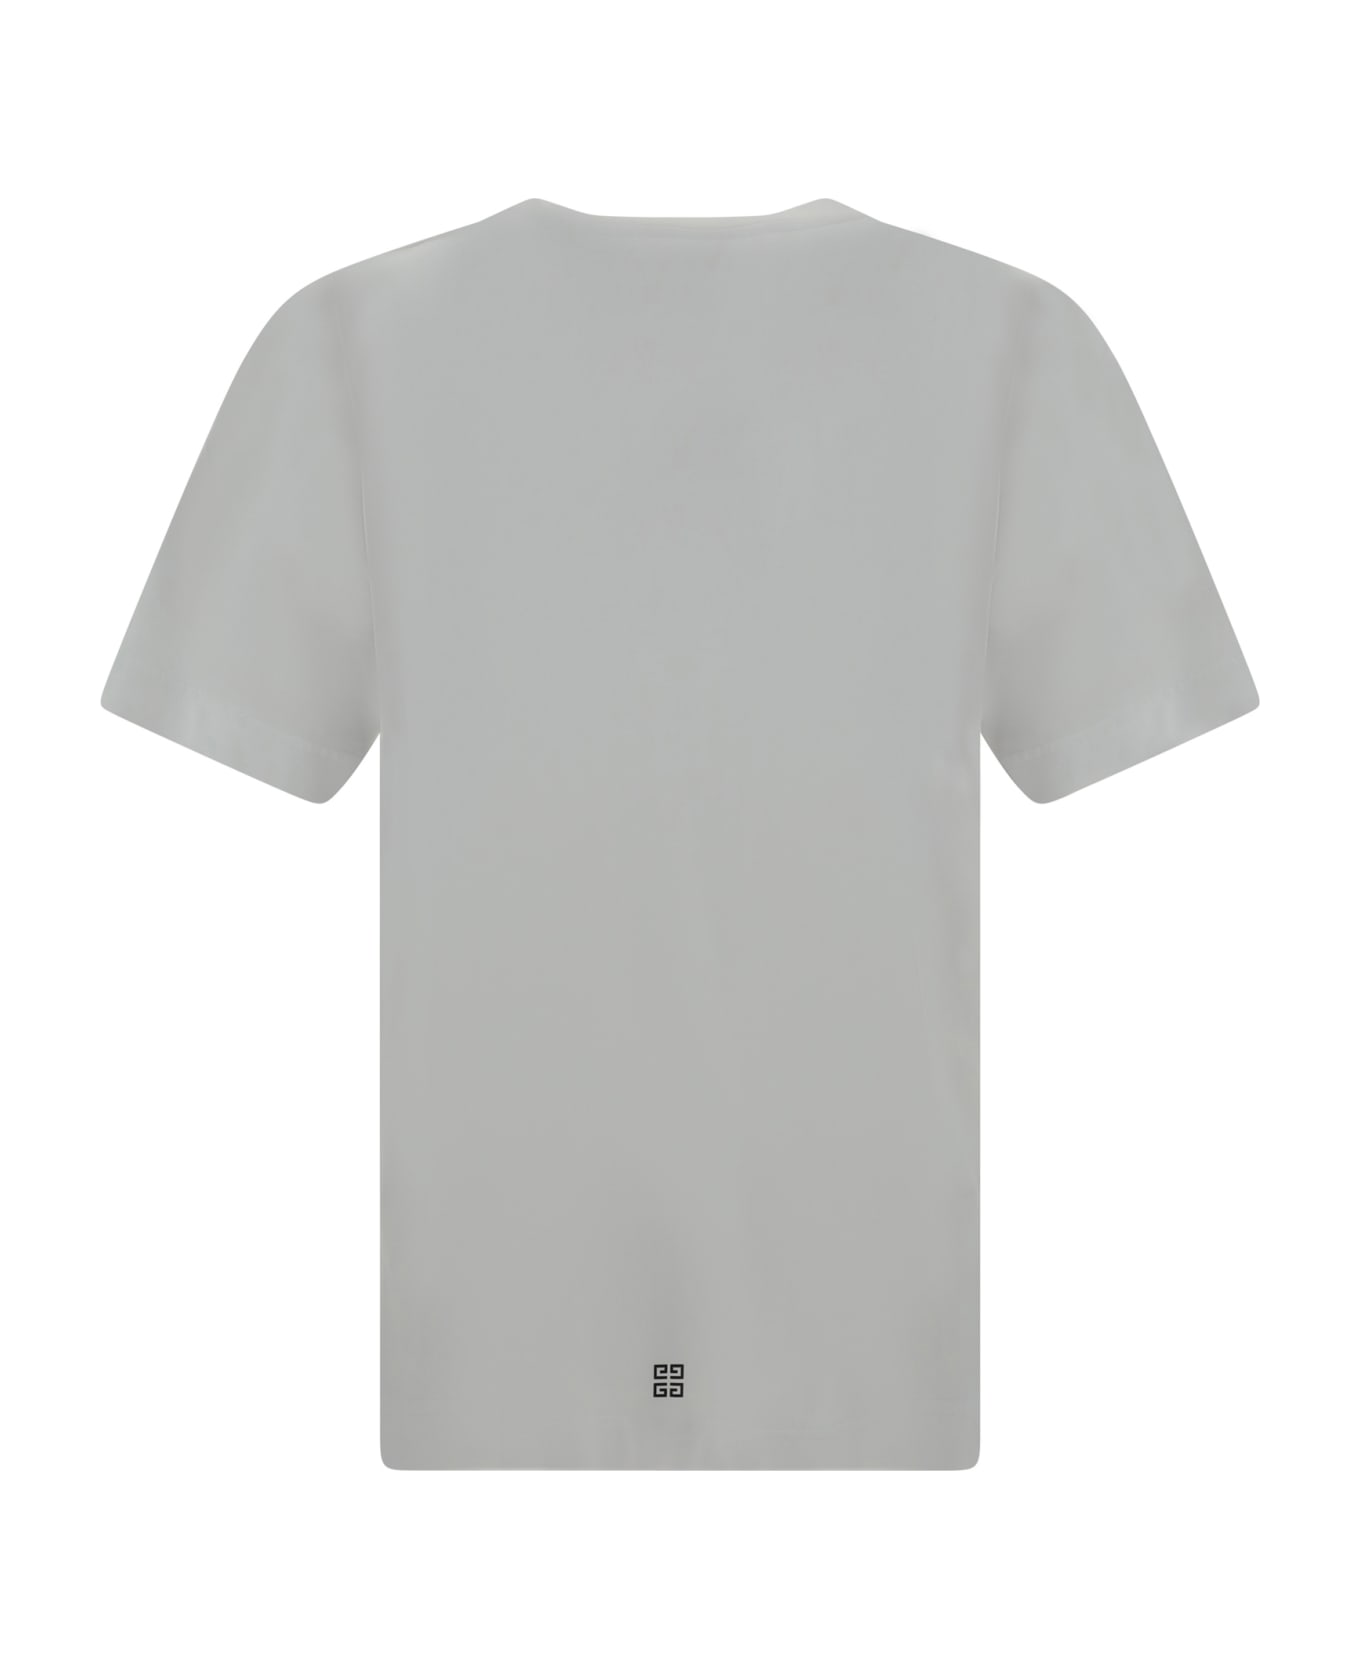 Givenchy T-shirt - White